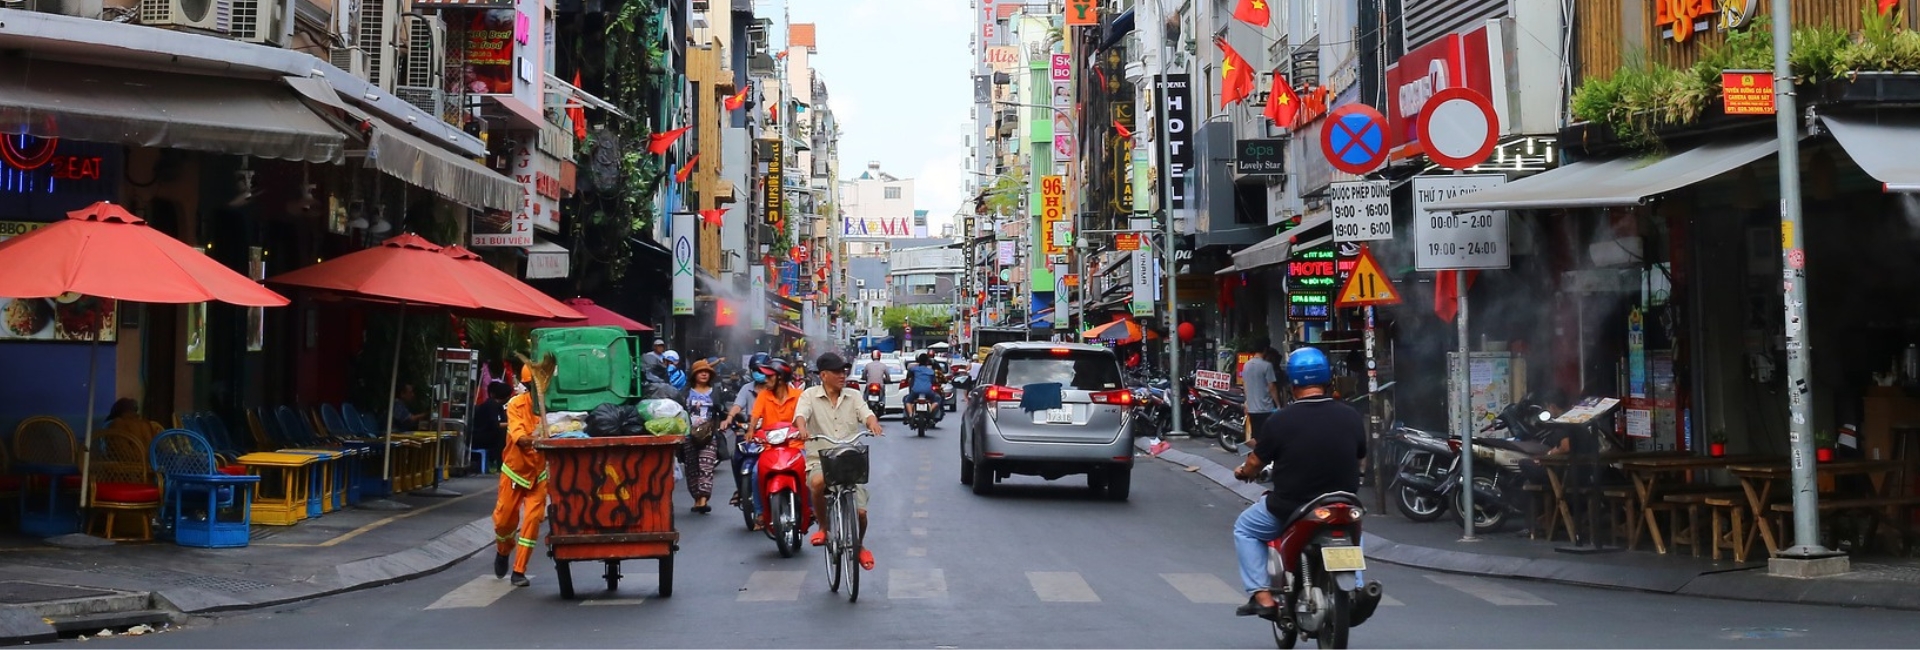 Saigon Off the beaten path: Top 15 Offbeat Activities for Curious Travelers